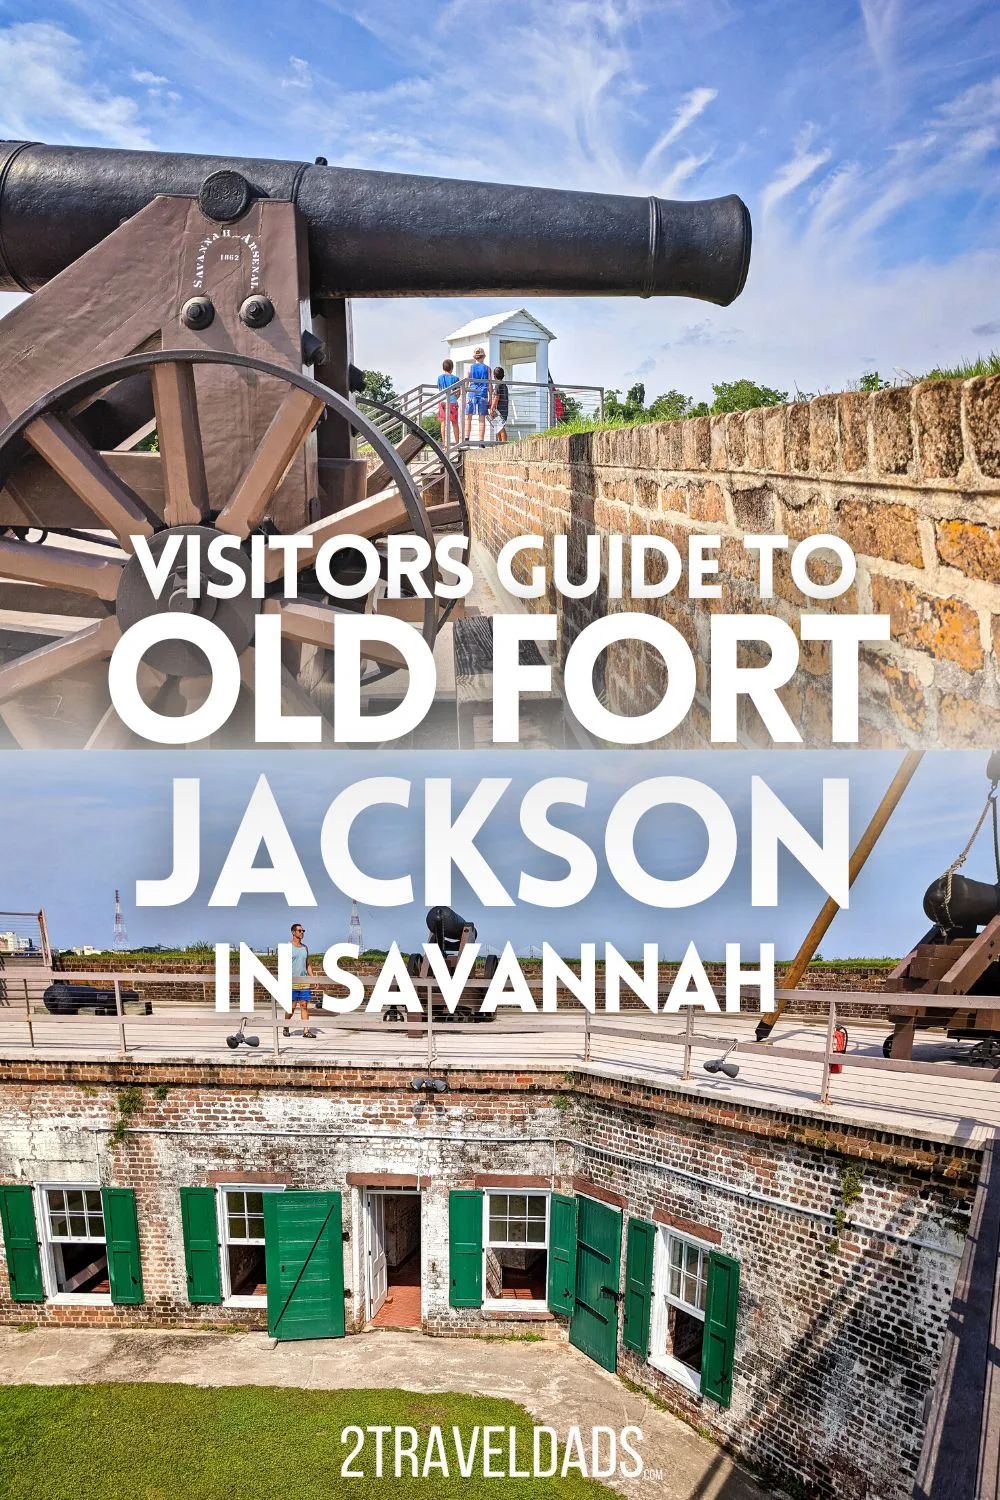 Historic Civil War Cannons  Official Georgia Tourism & Travel